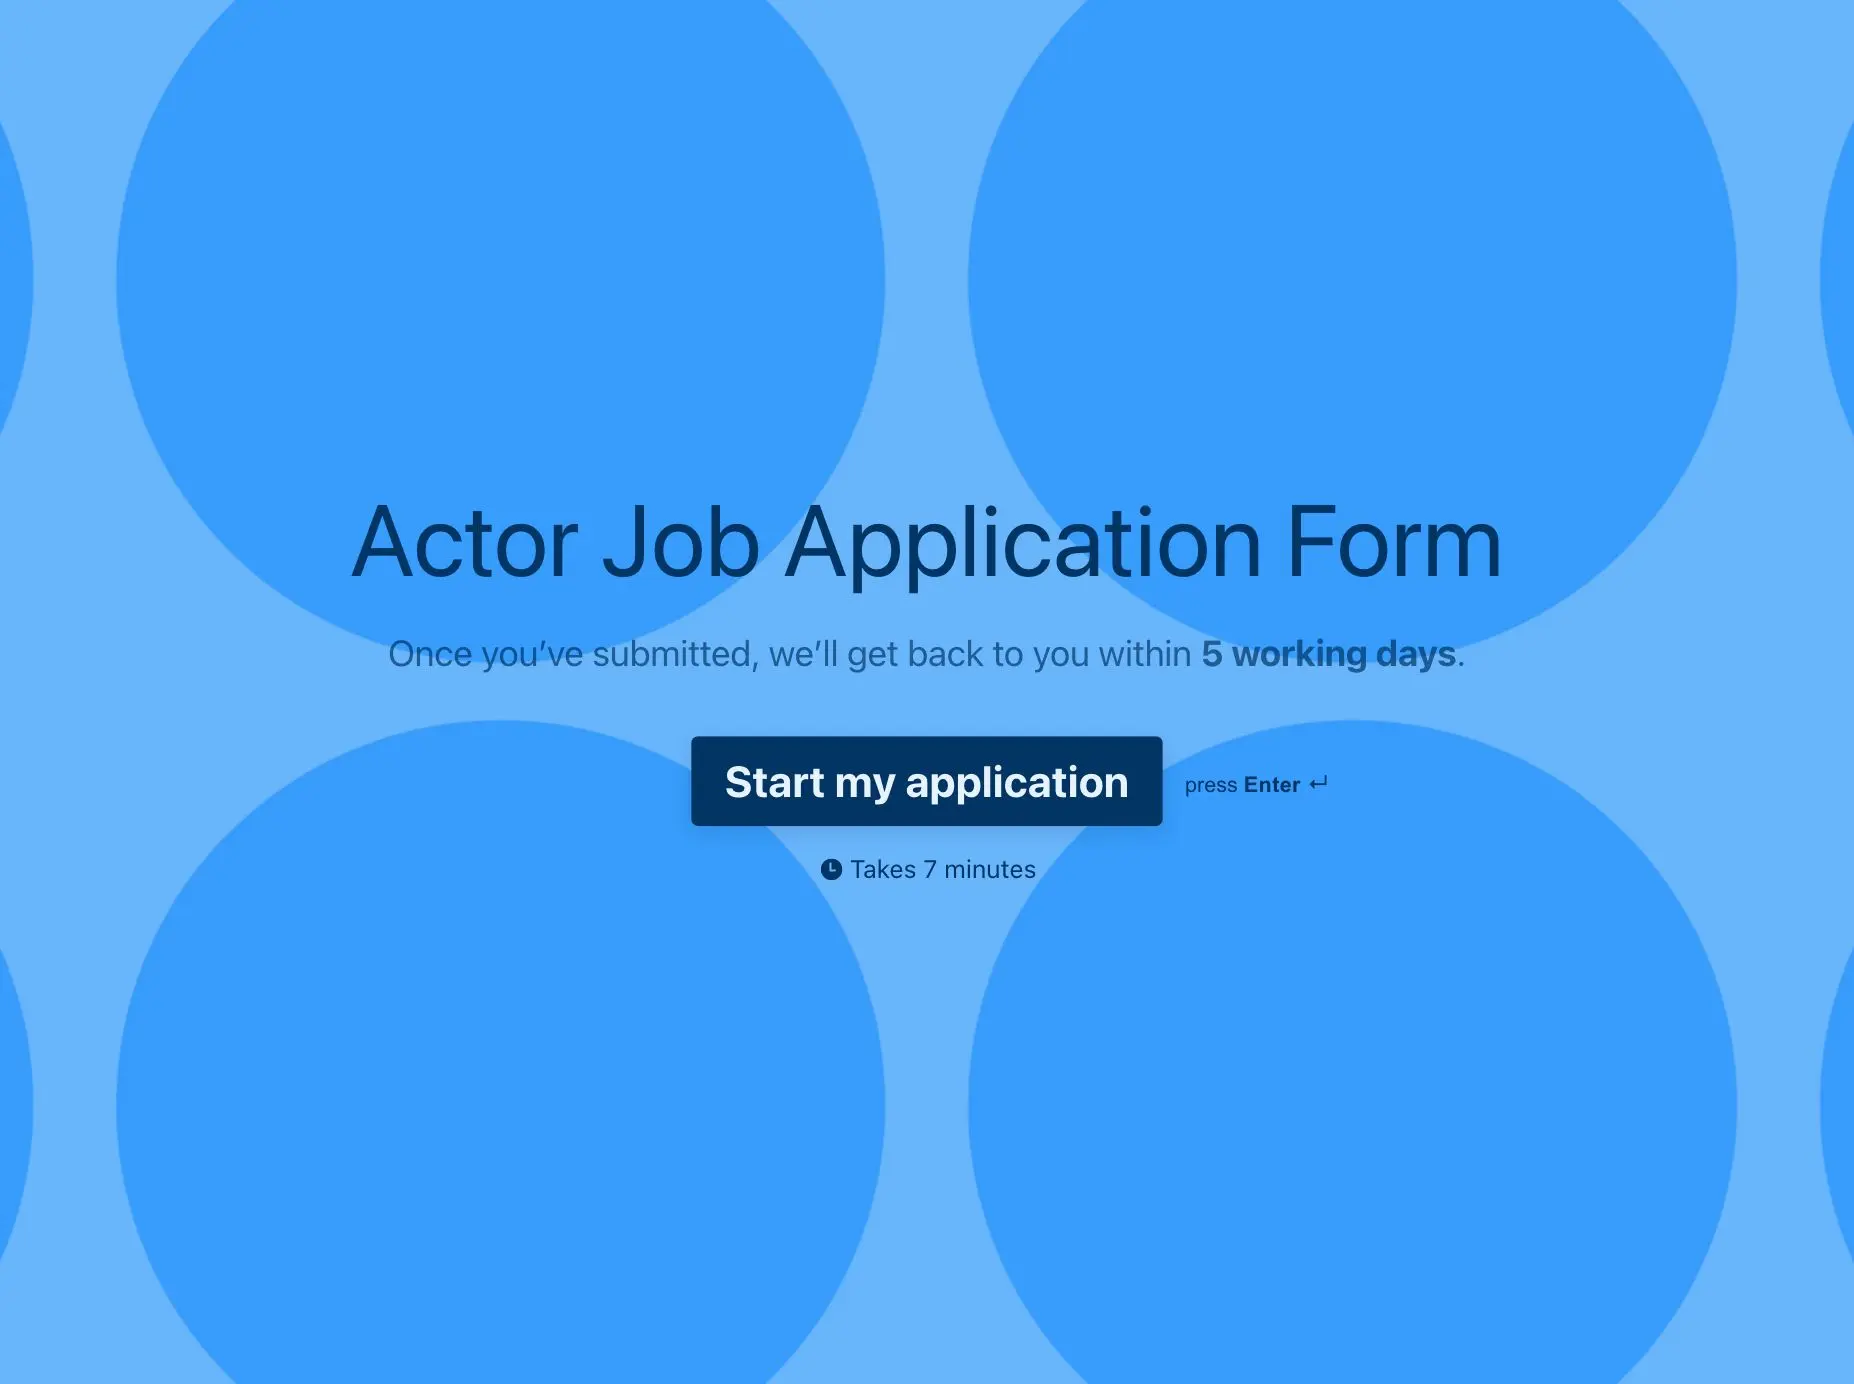 Actor Job Application Form Template Hero